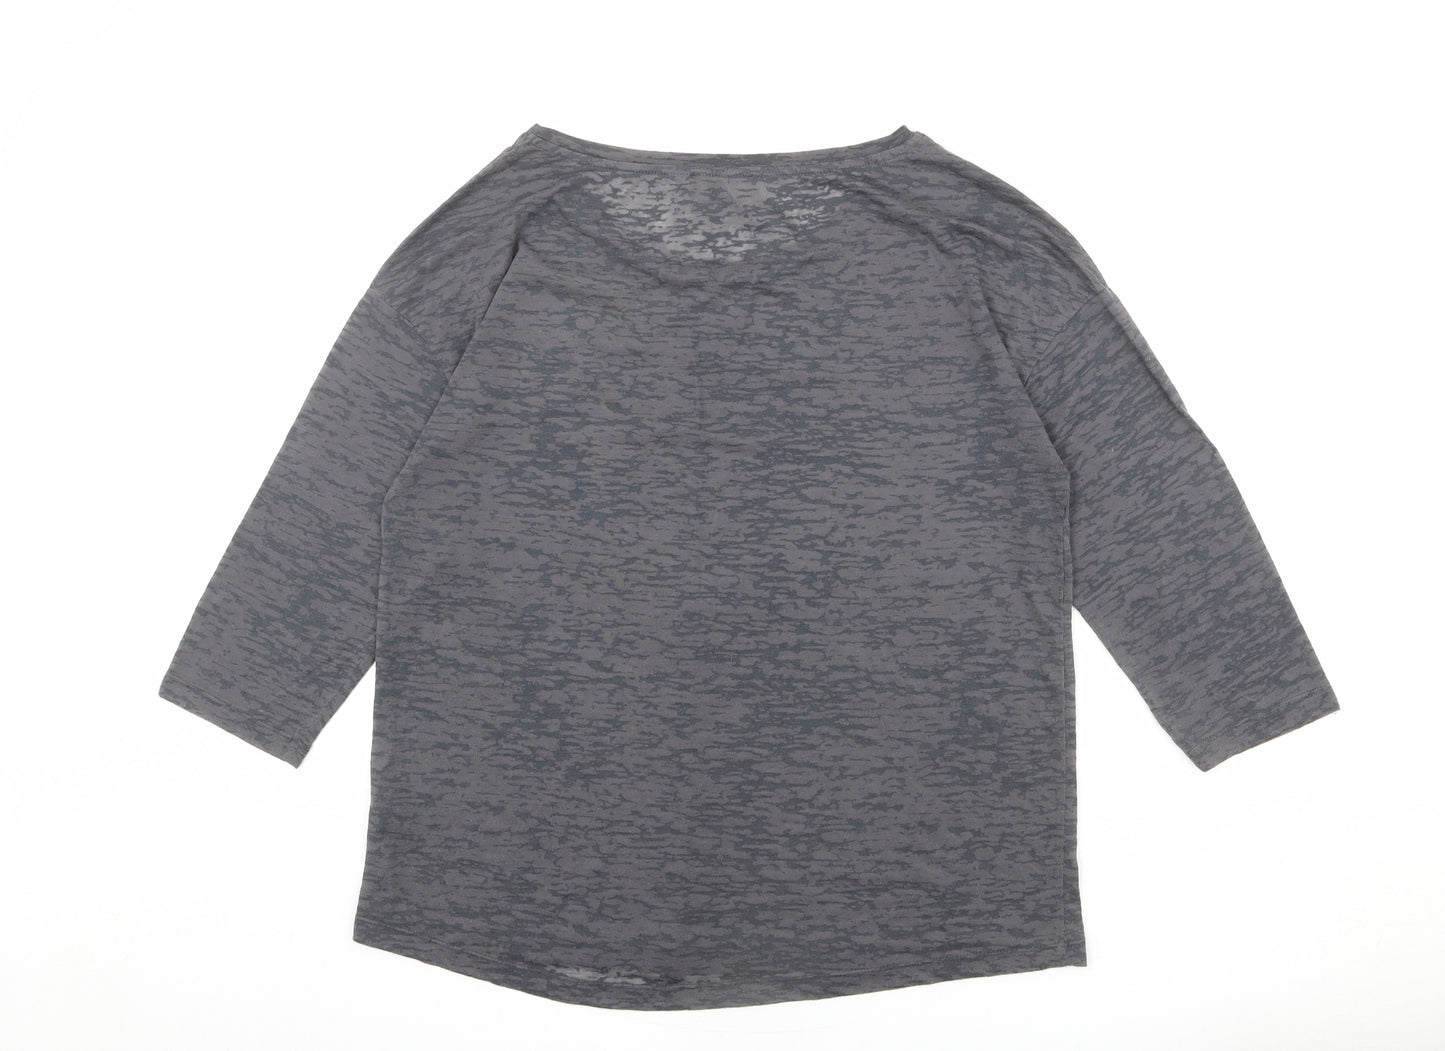 NEXT Womens Grey Polyester Basic T-Shirt Size 14 Round Neck